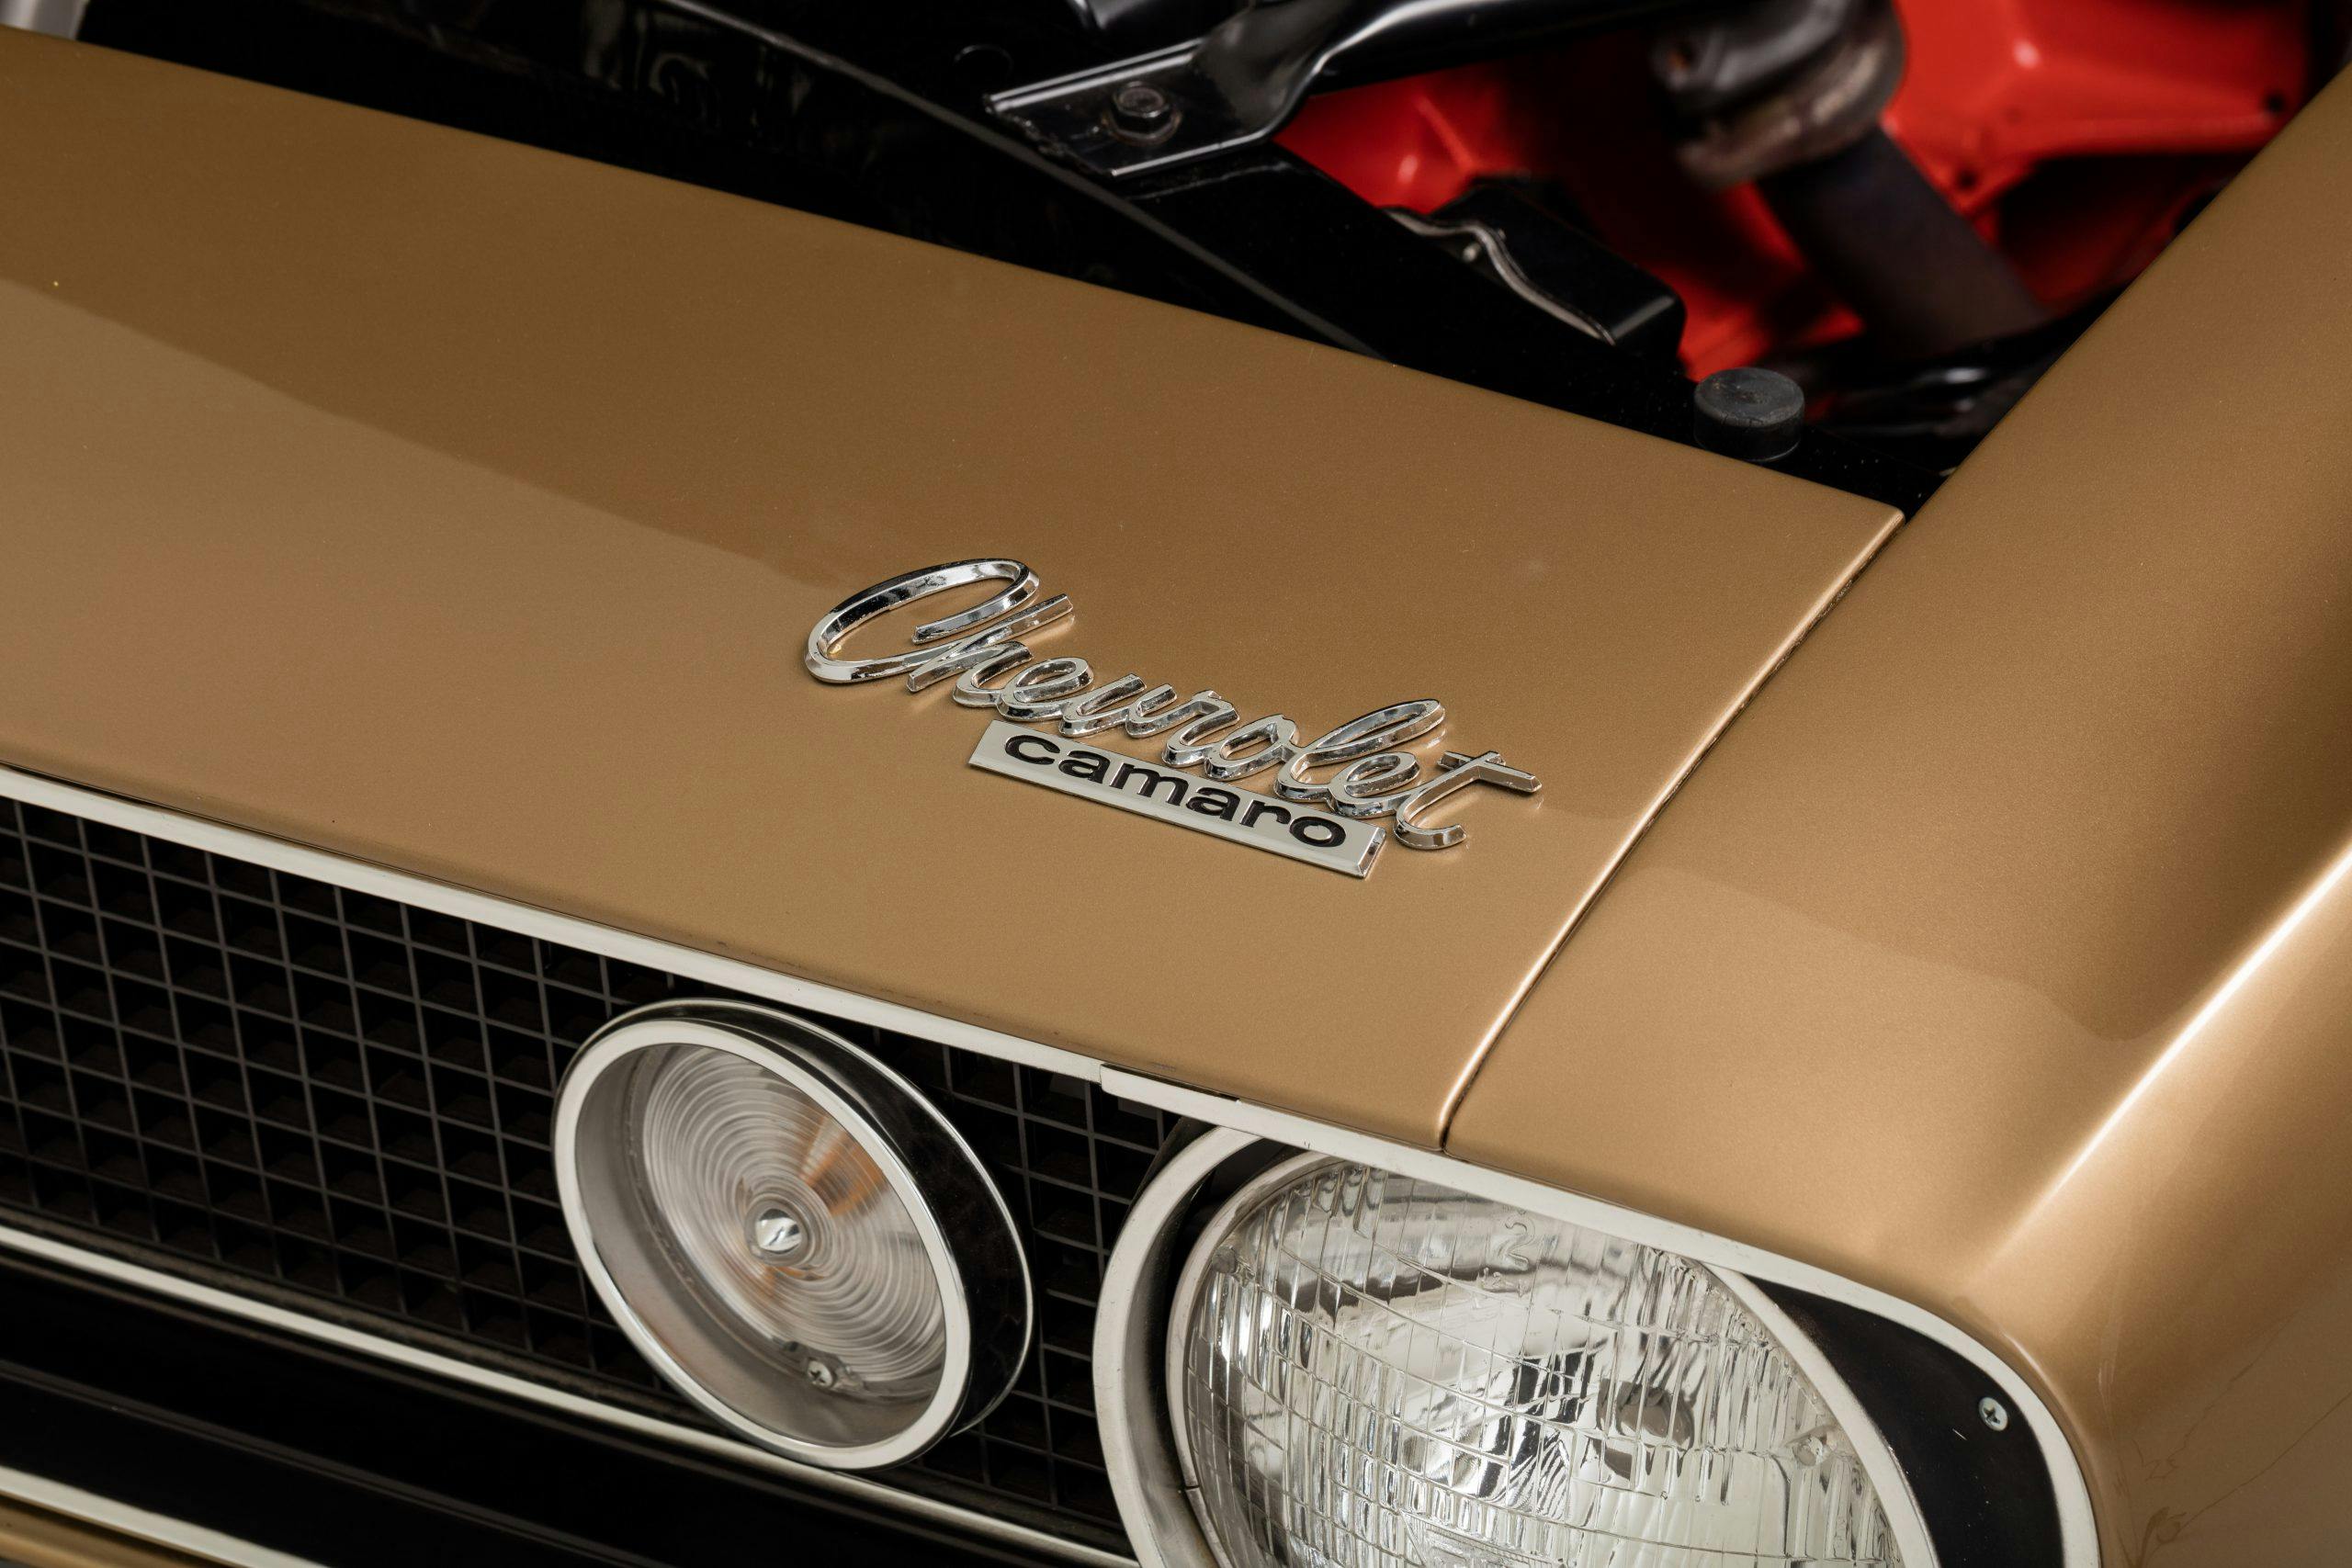 HVA - Chevrolet Camaro N100001 - Closeup front badge and headlights